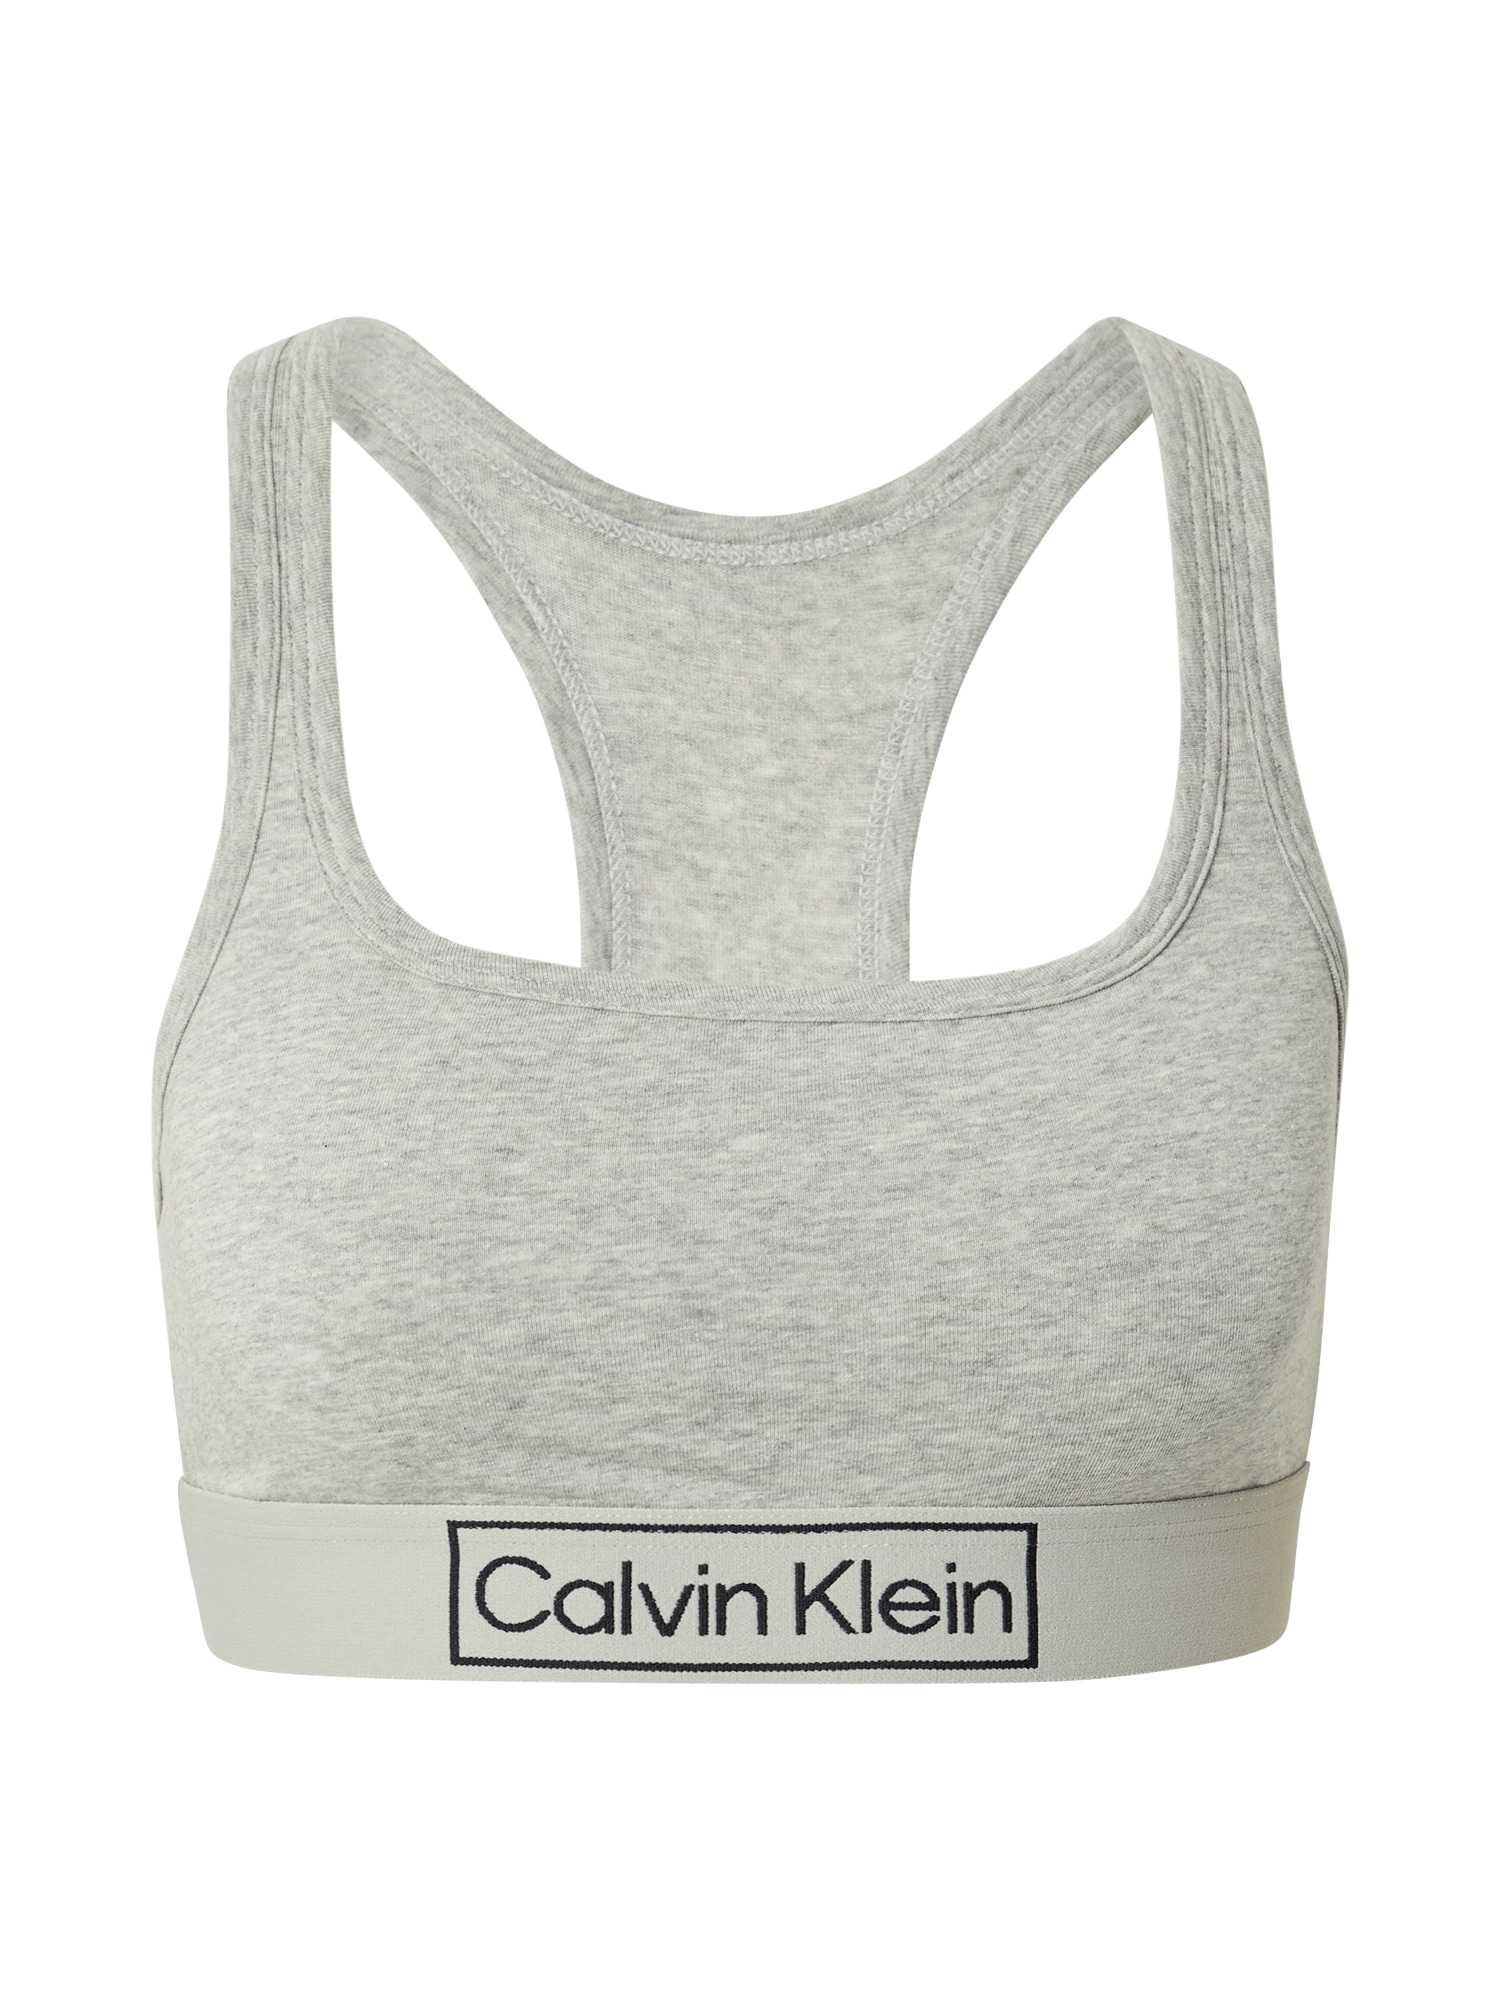 Podprsenka sivá sivá melírovaná čierna Calvin Klein Underwear